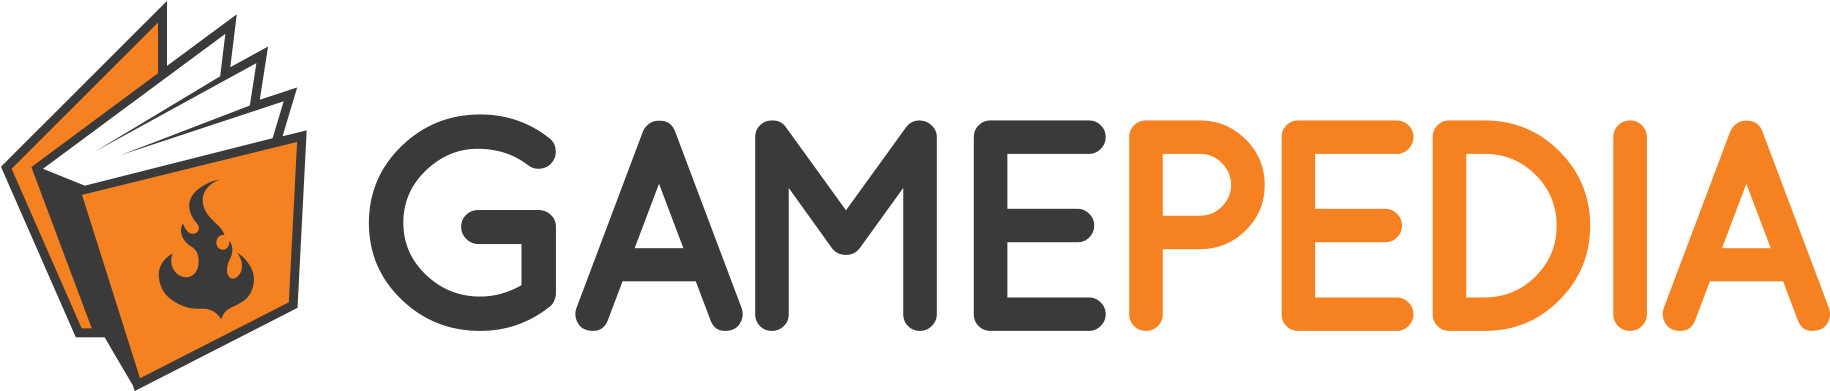 James Hay Partnership Logo (1872x414), Png Download